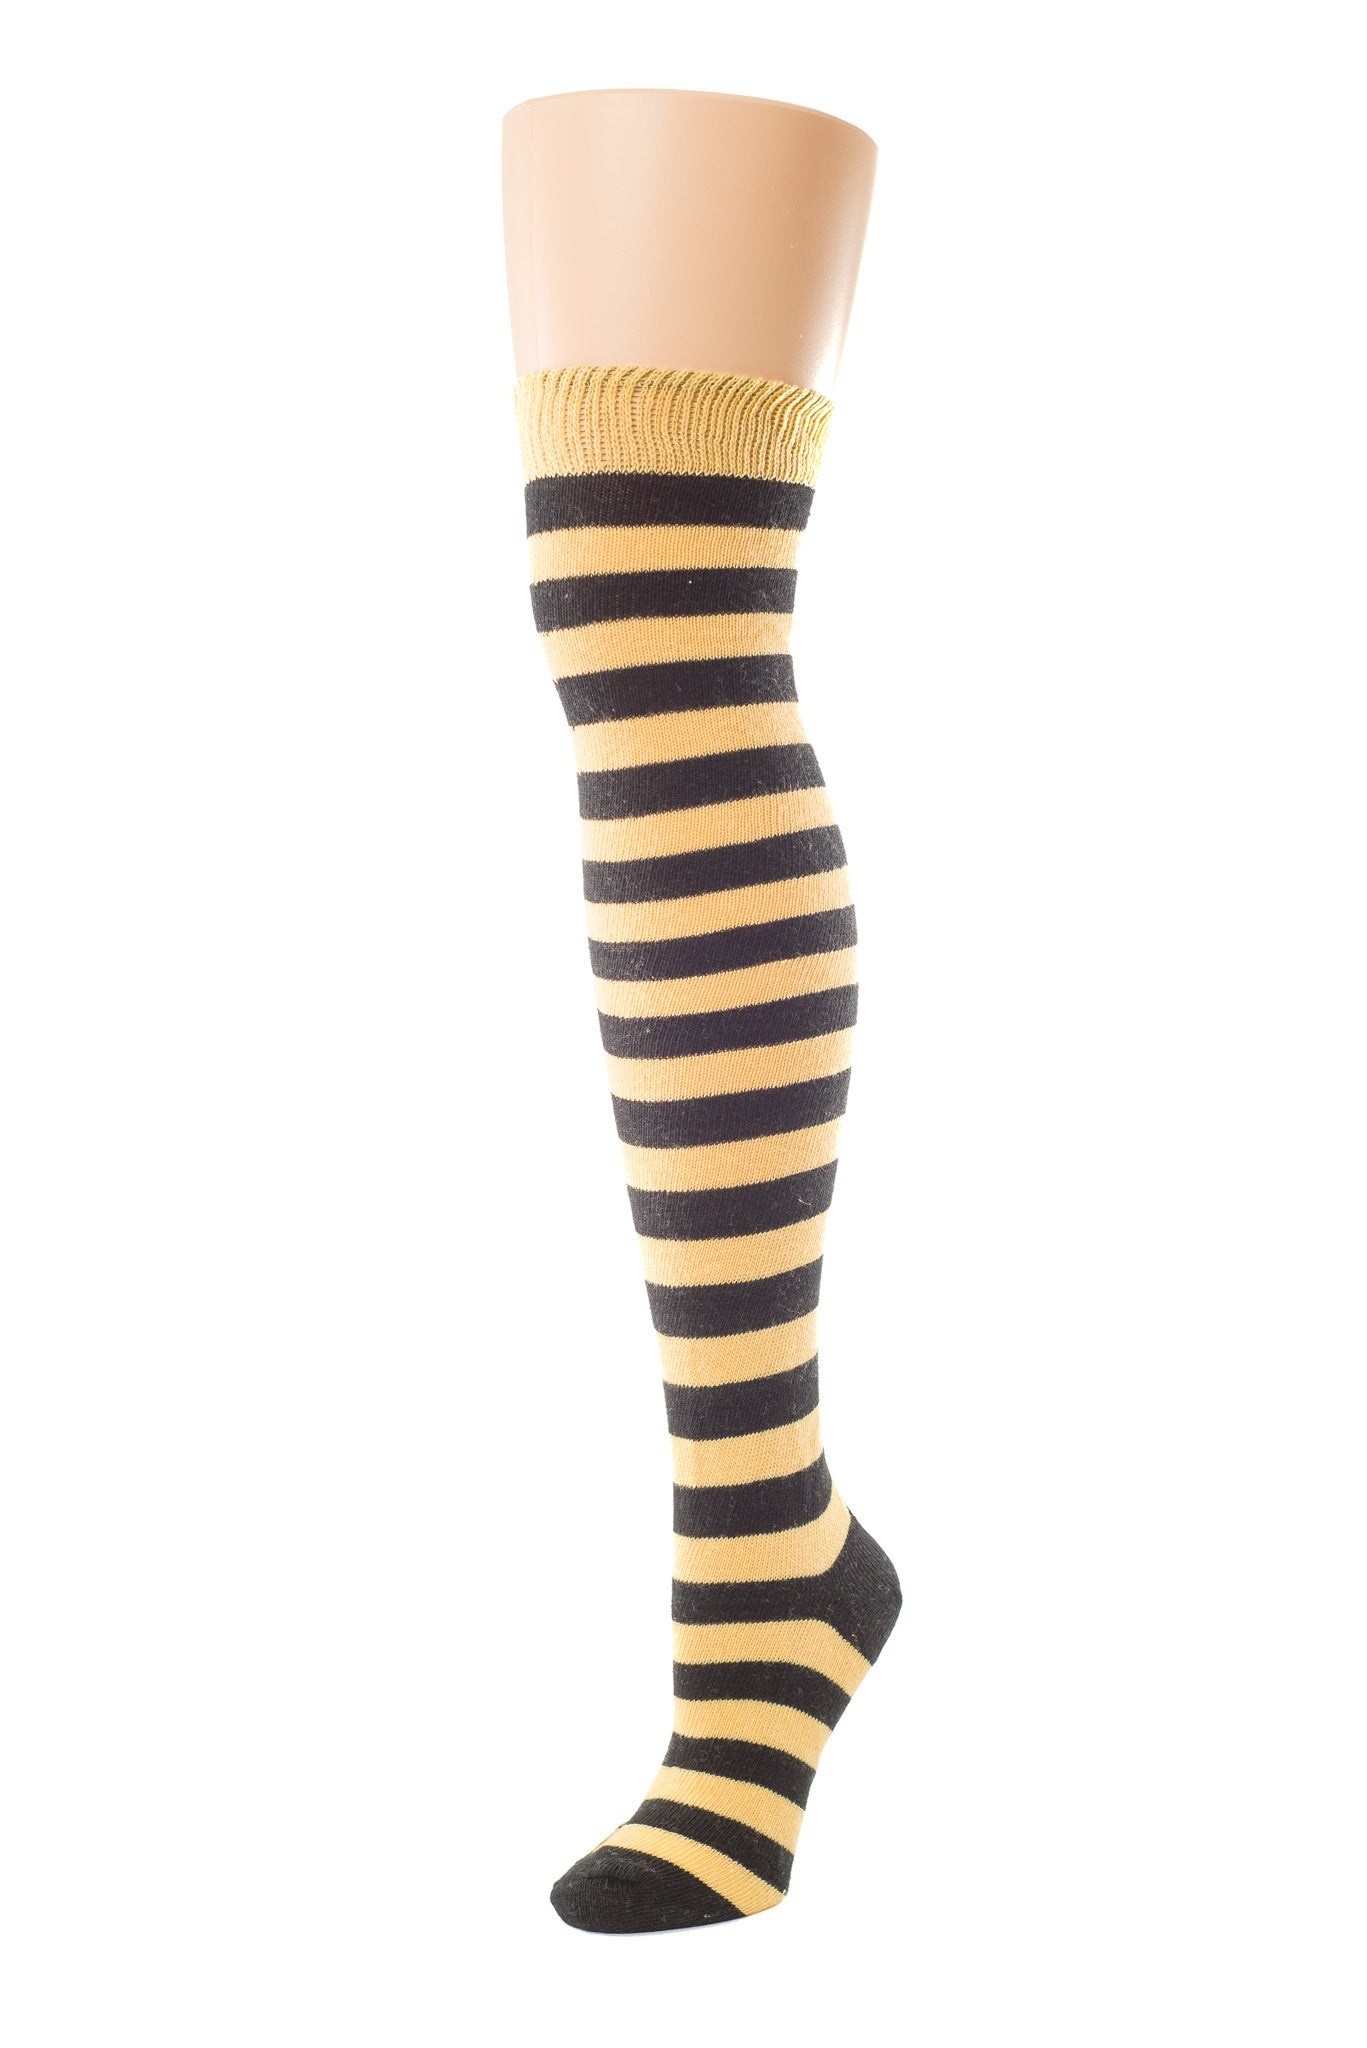 Heavyweight Horizontal Striped Cotton Stockings | Delp Stockings